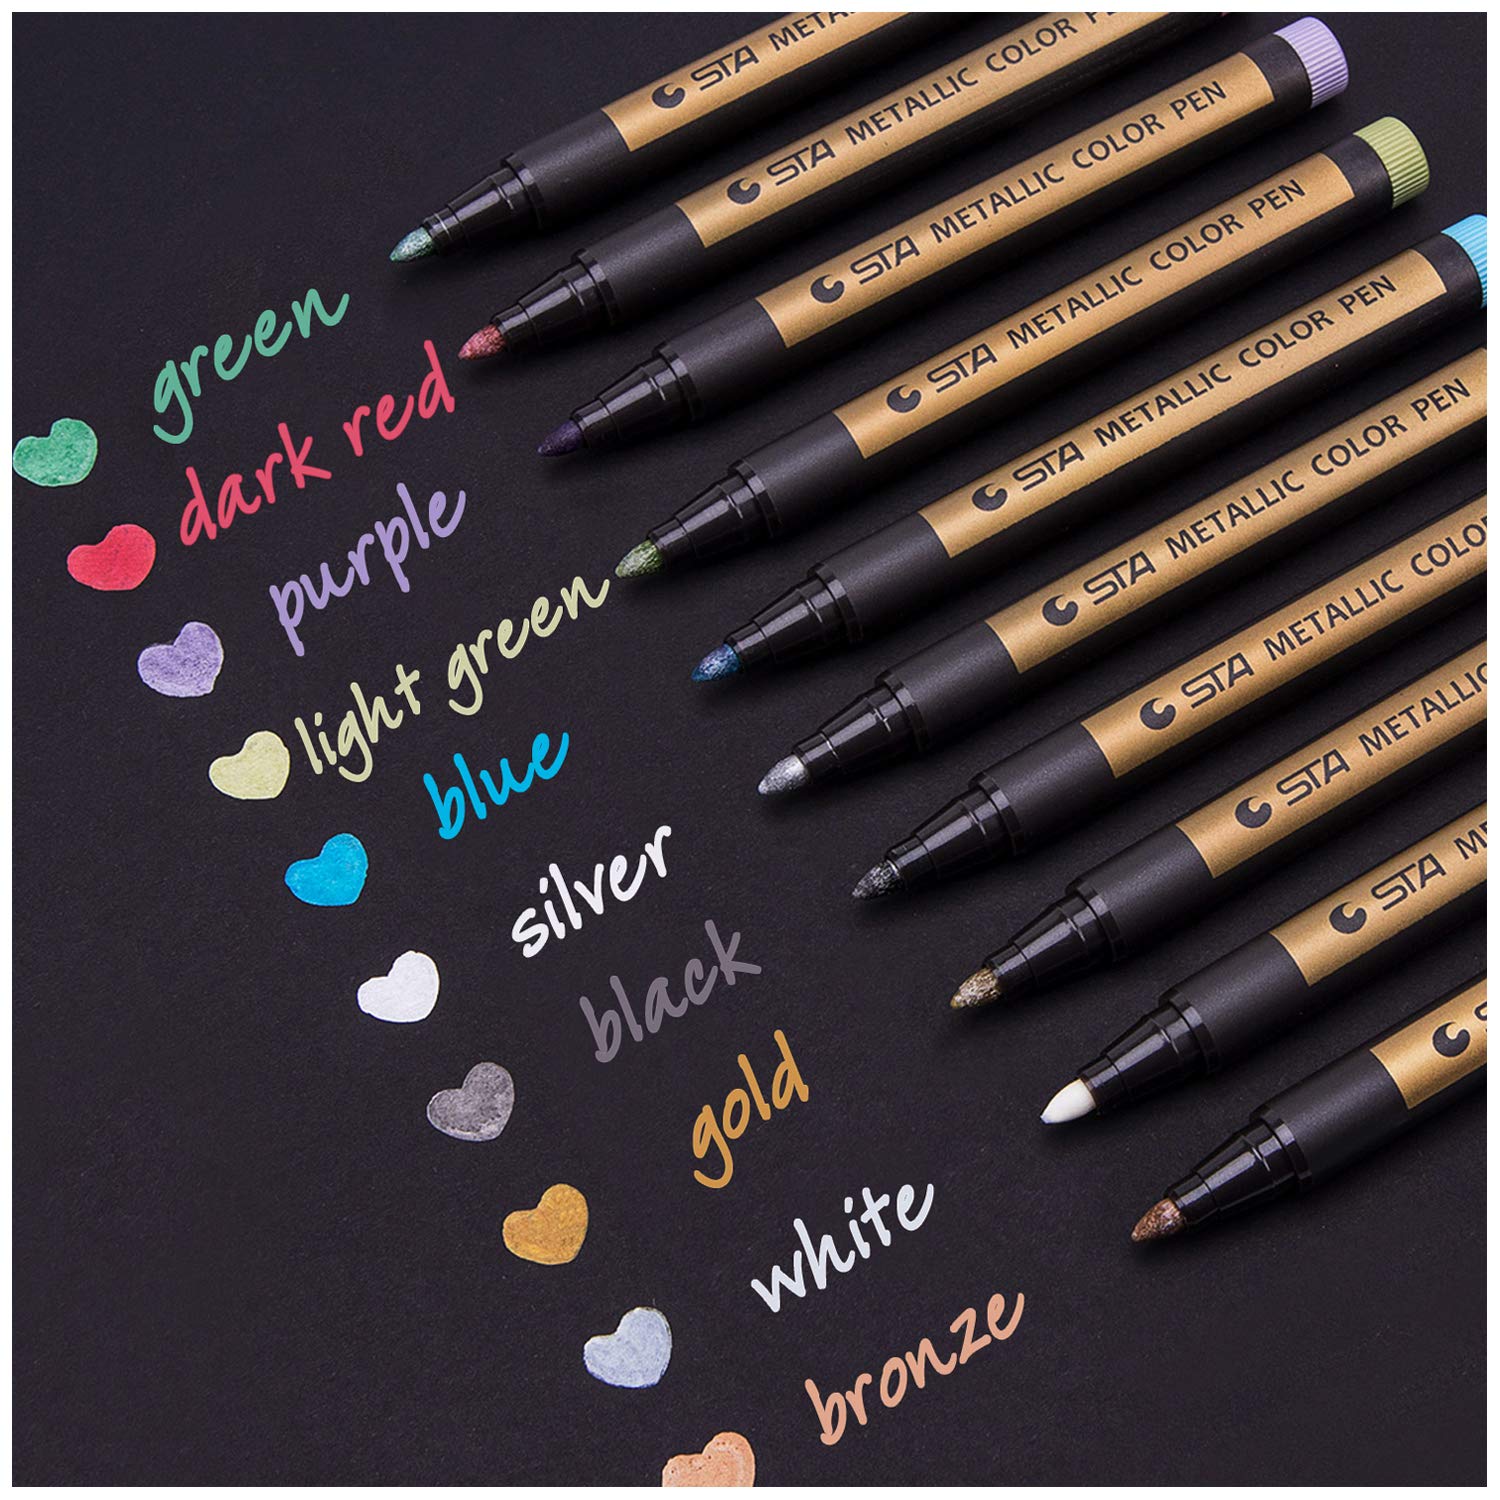  Dyvicl Gold Gel Pens, 0.5 mm Extra Fine Pens Gel Ink Pens for  Black Paper Drawing, Sketching, Illustration, Adult Coloring, Journaling,  Set of 12 : Arts, Crafts & Sewing